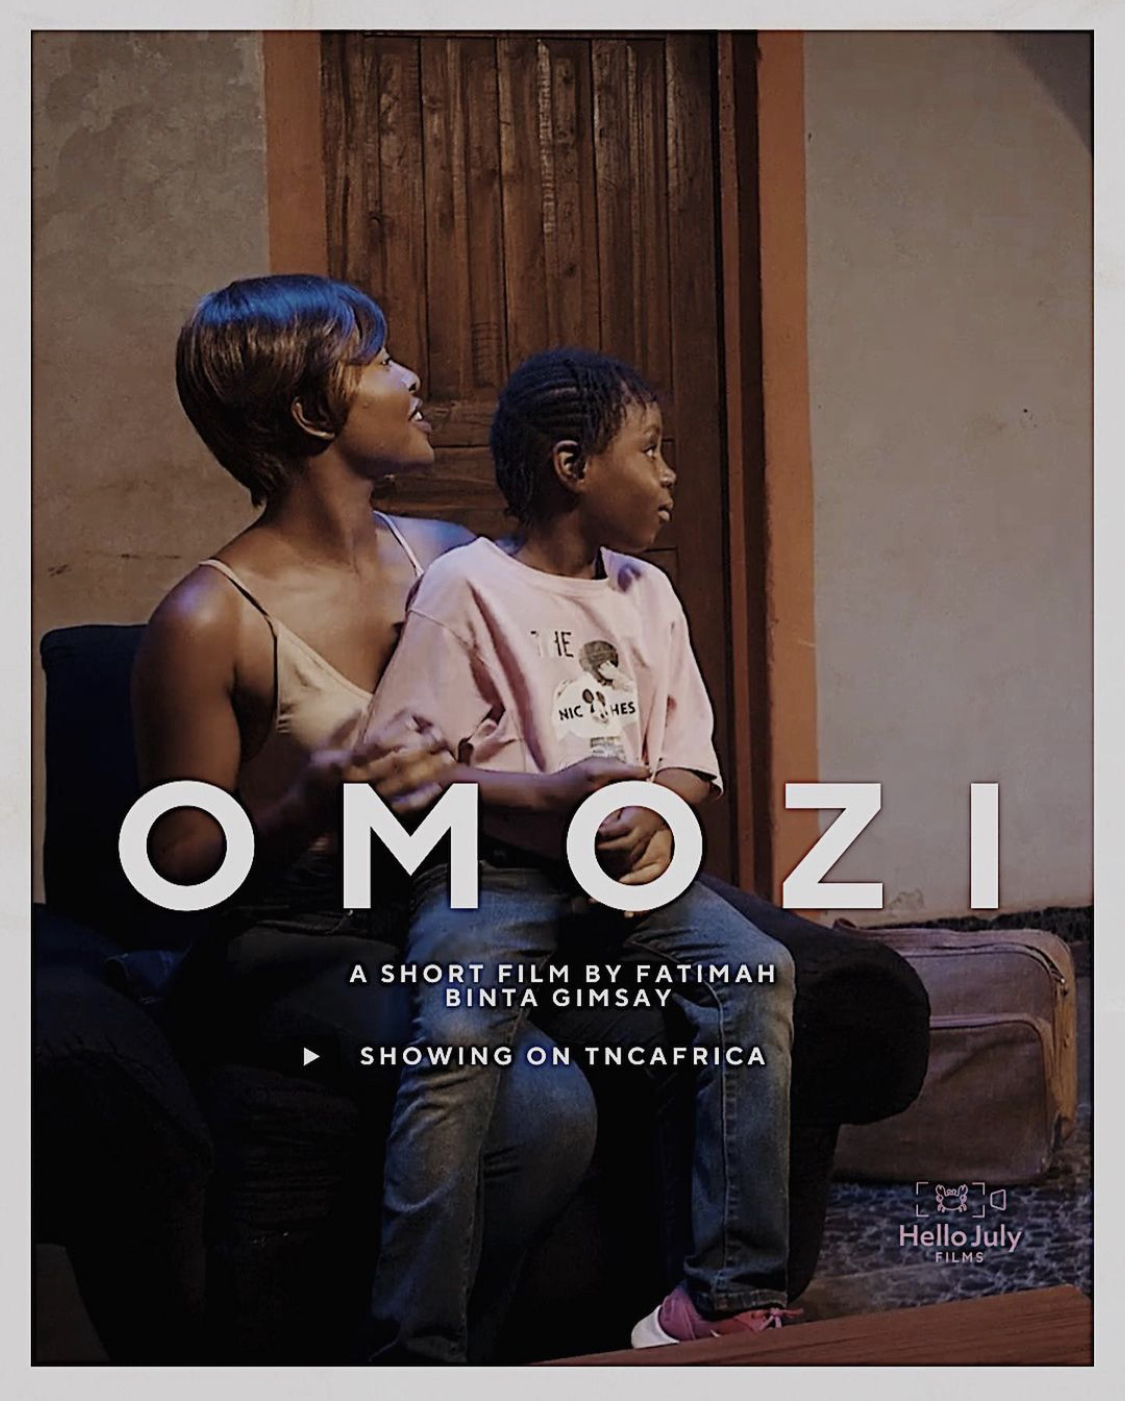 IMG 9954 - Director Fatimah Binta Gimsay on The Making of Omozi (Exclusive)